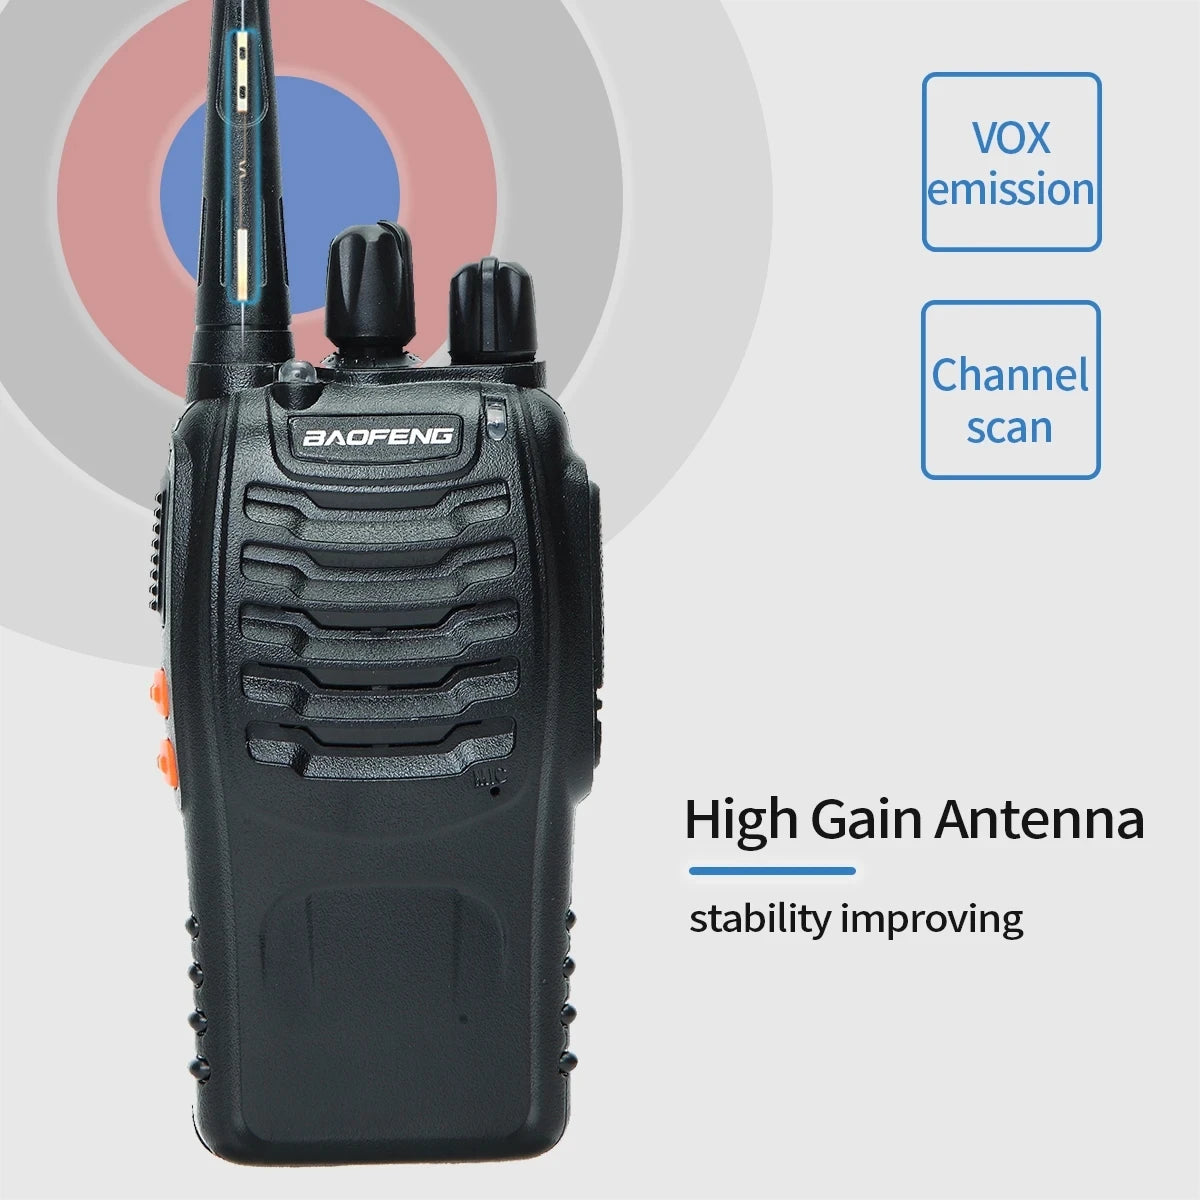 2/4PCS Baofeng BF-888S 12W Walkie Talkie Dual Band Portable Long Range Standby UHF 400-470MHz USB Ham Two Way Radio for Hunting